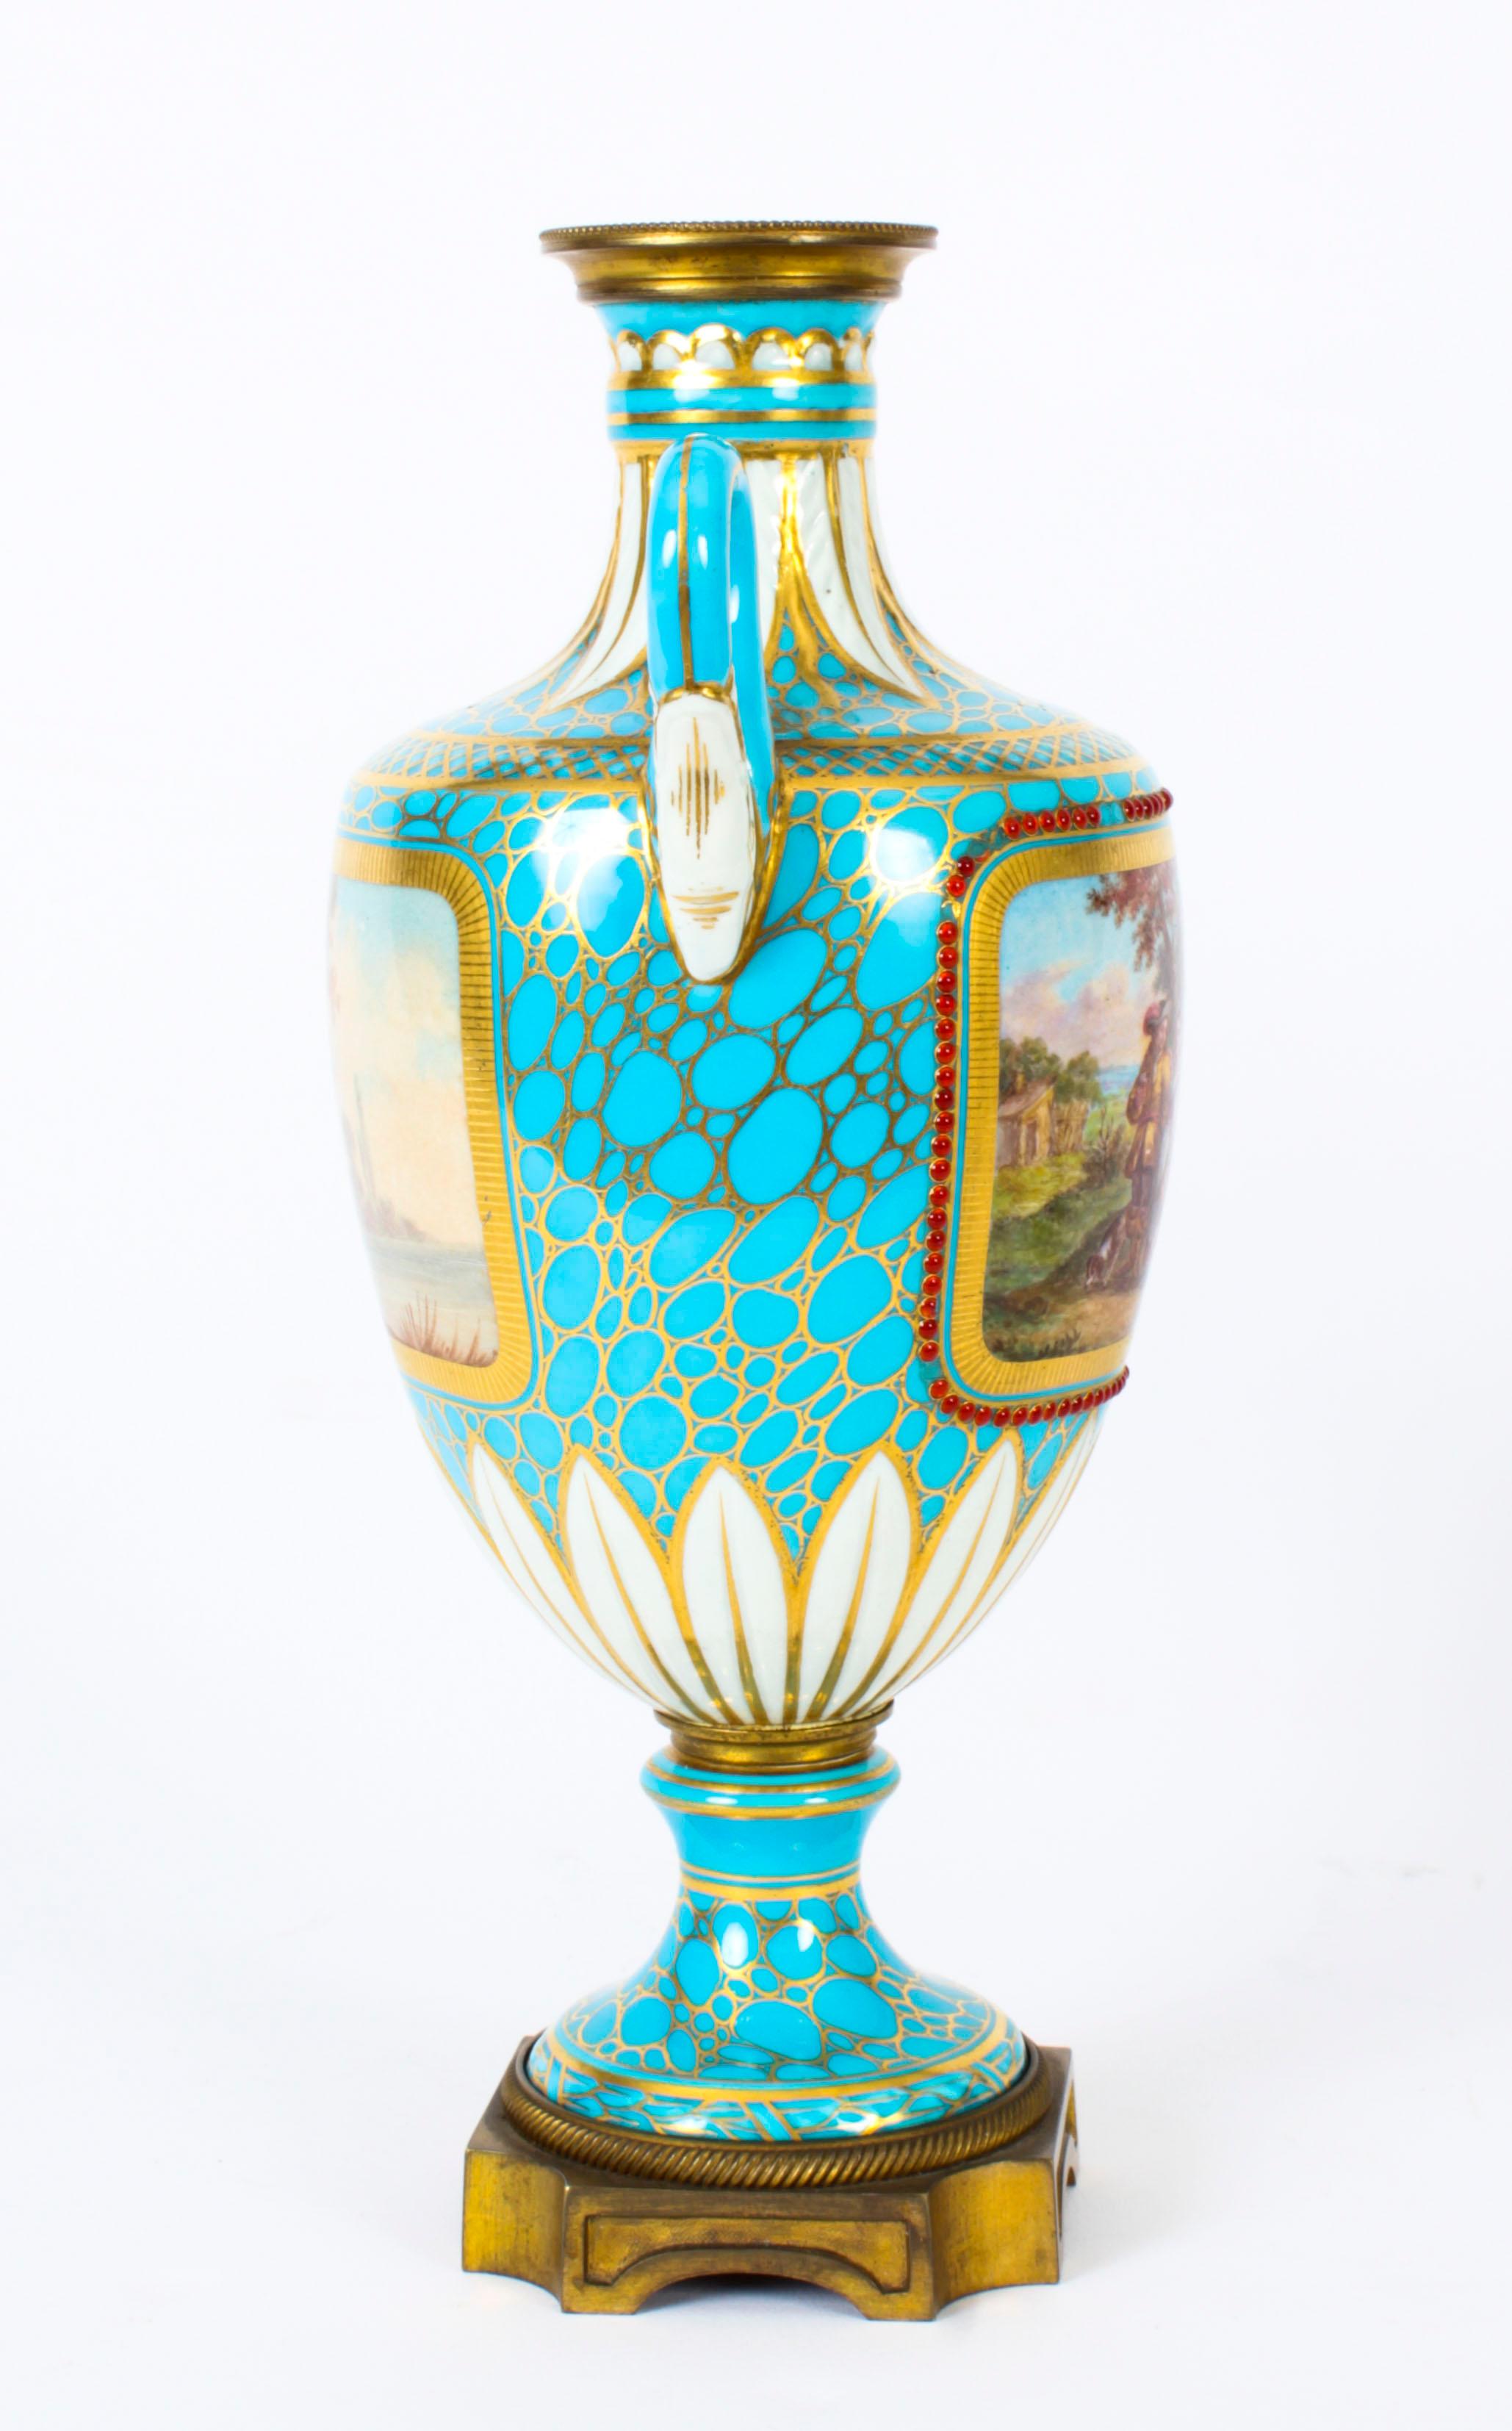 Antique Pair of French Bleu Celeste Porcelain Urns 19th Century For Sale 2